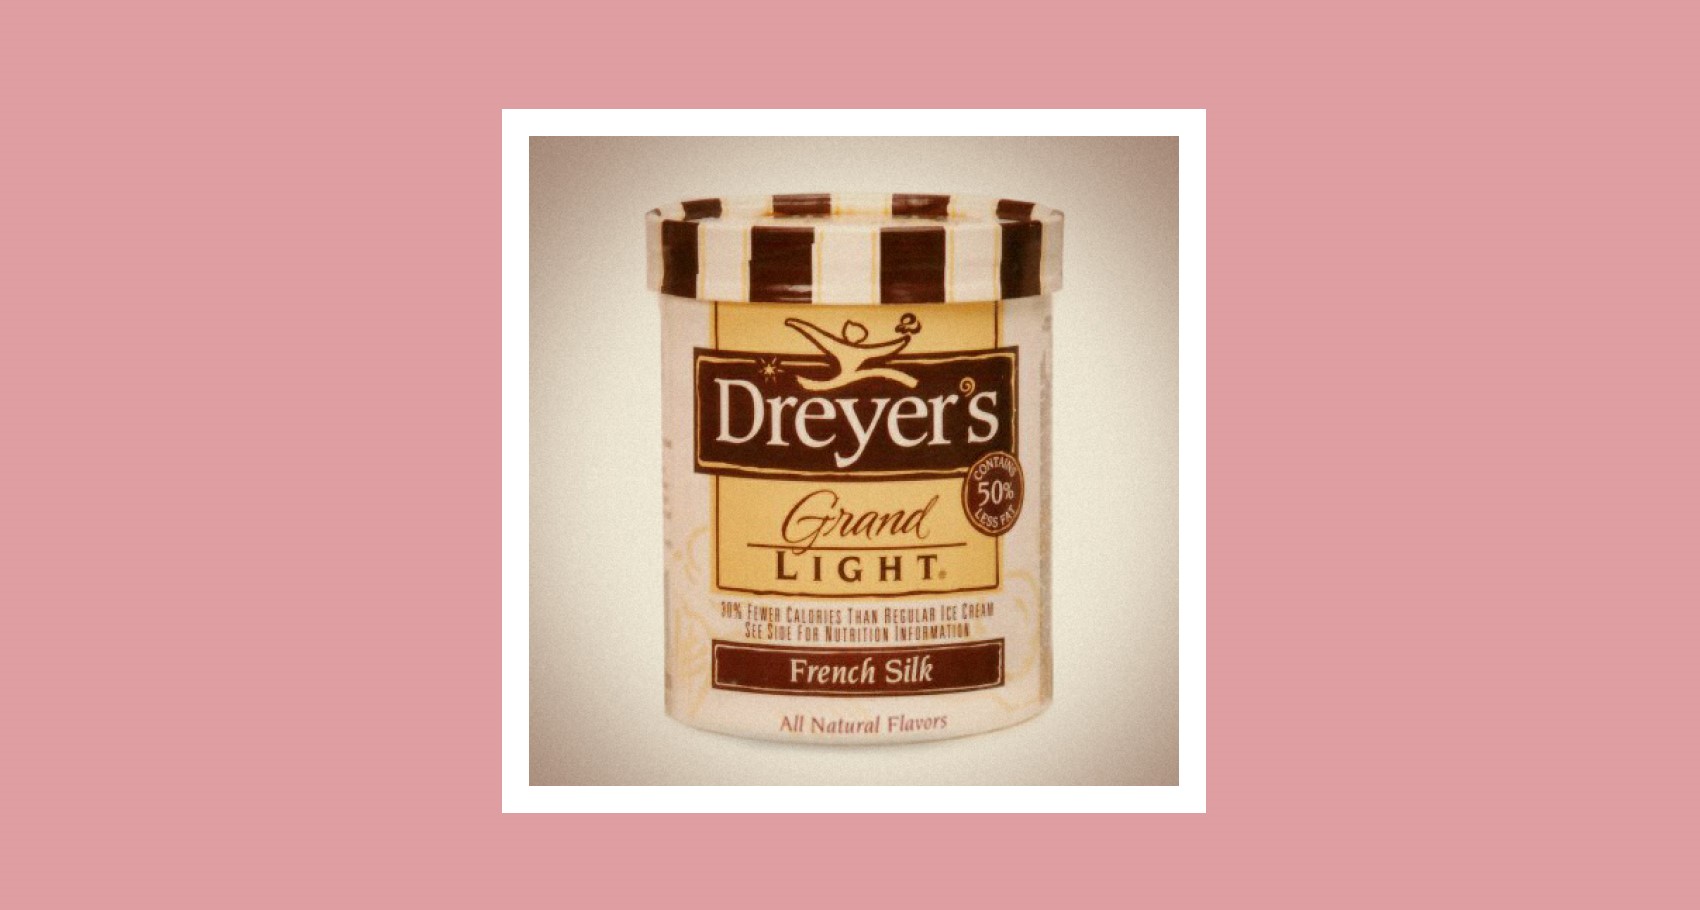 Carton of Dreyer's light French silk ice cream from 1987